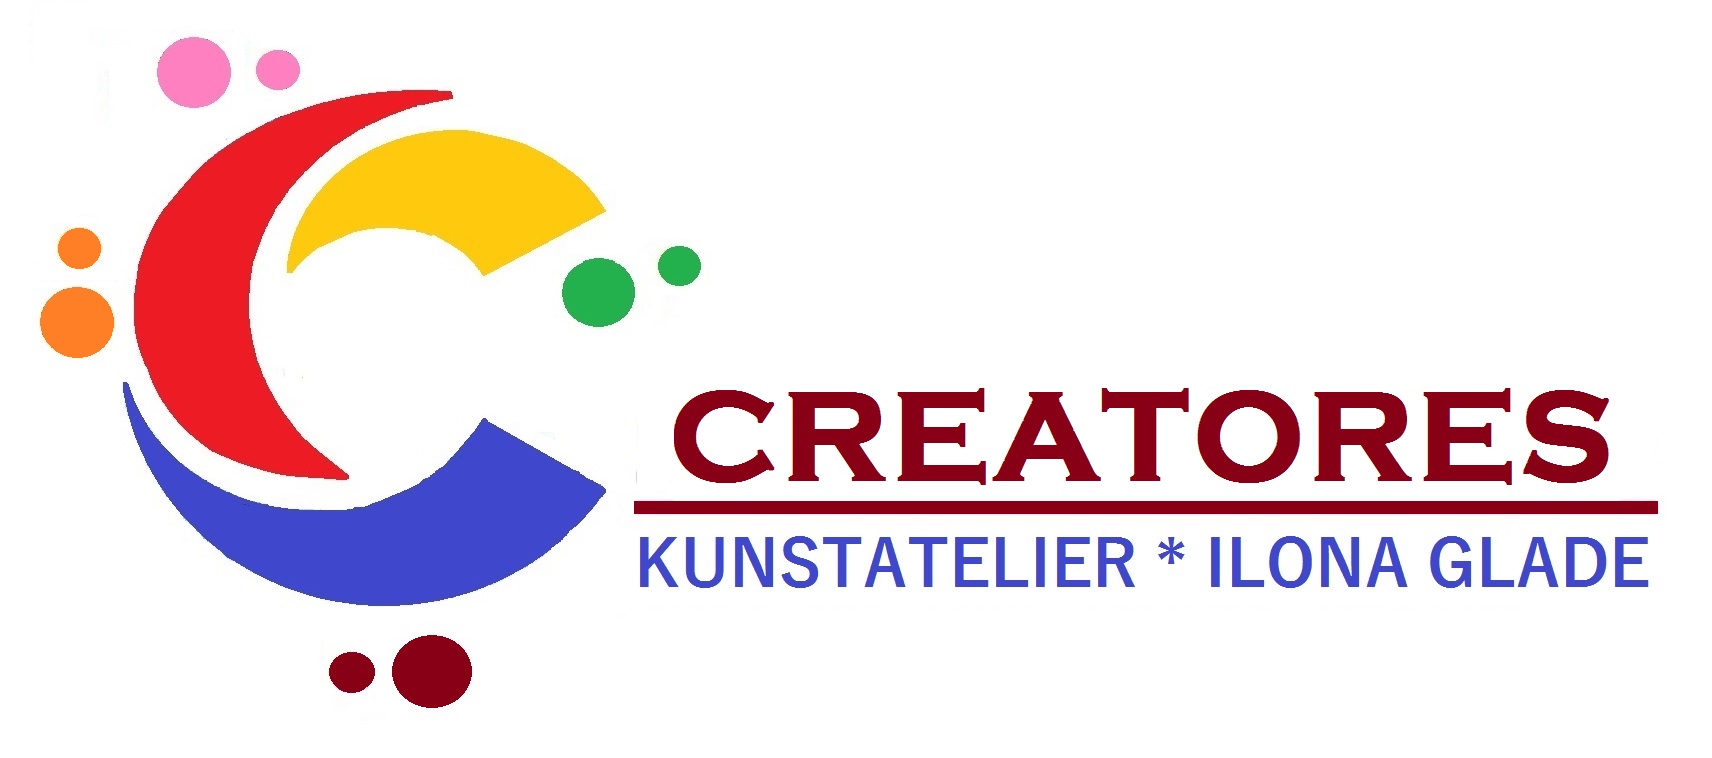 KUNSTATELIER: CREATORES in PADERBORN